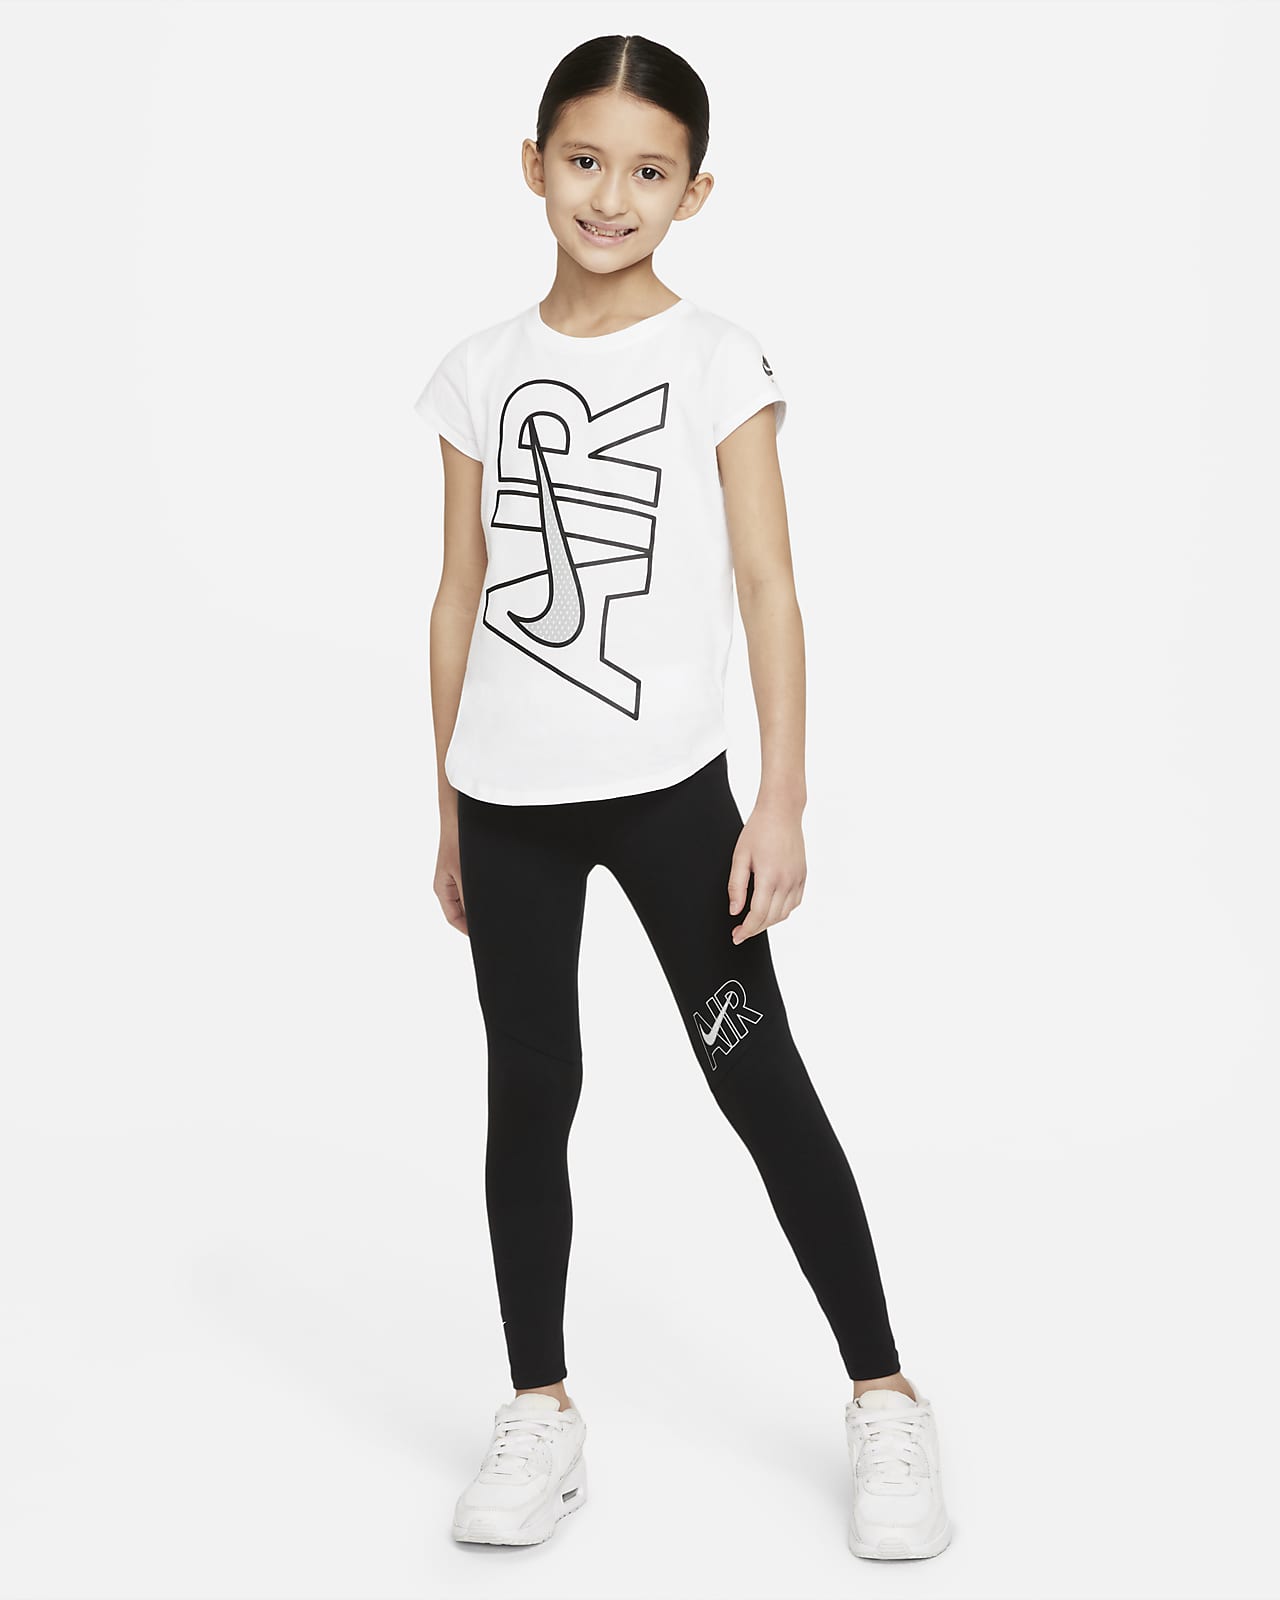 Nike Air Little Kids' T-Shirt and Leggings Set.